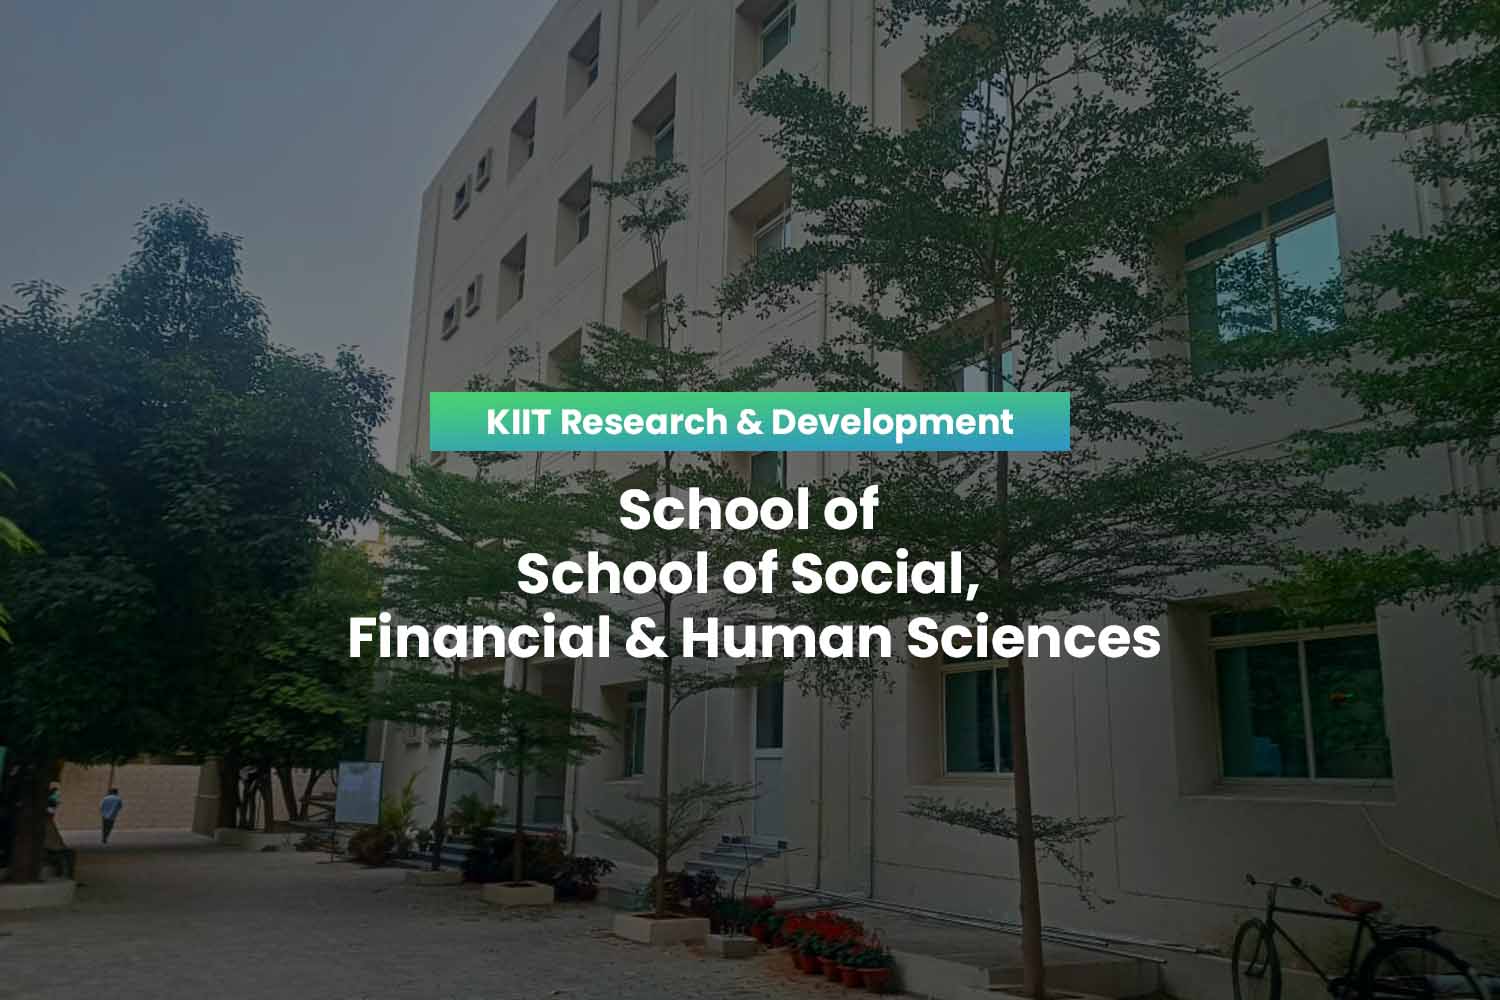 KIIT School of Social Financial & Human Sciences